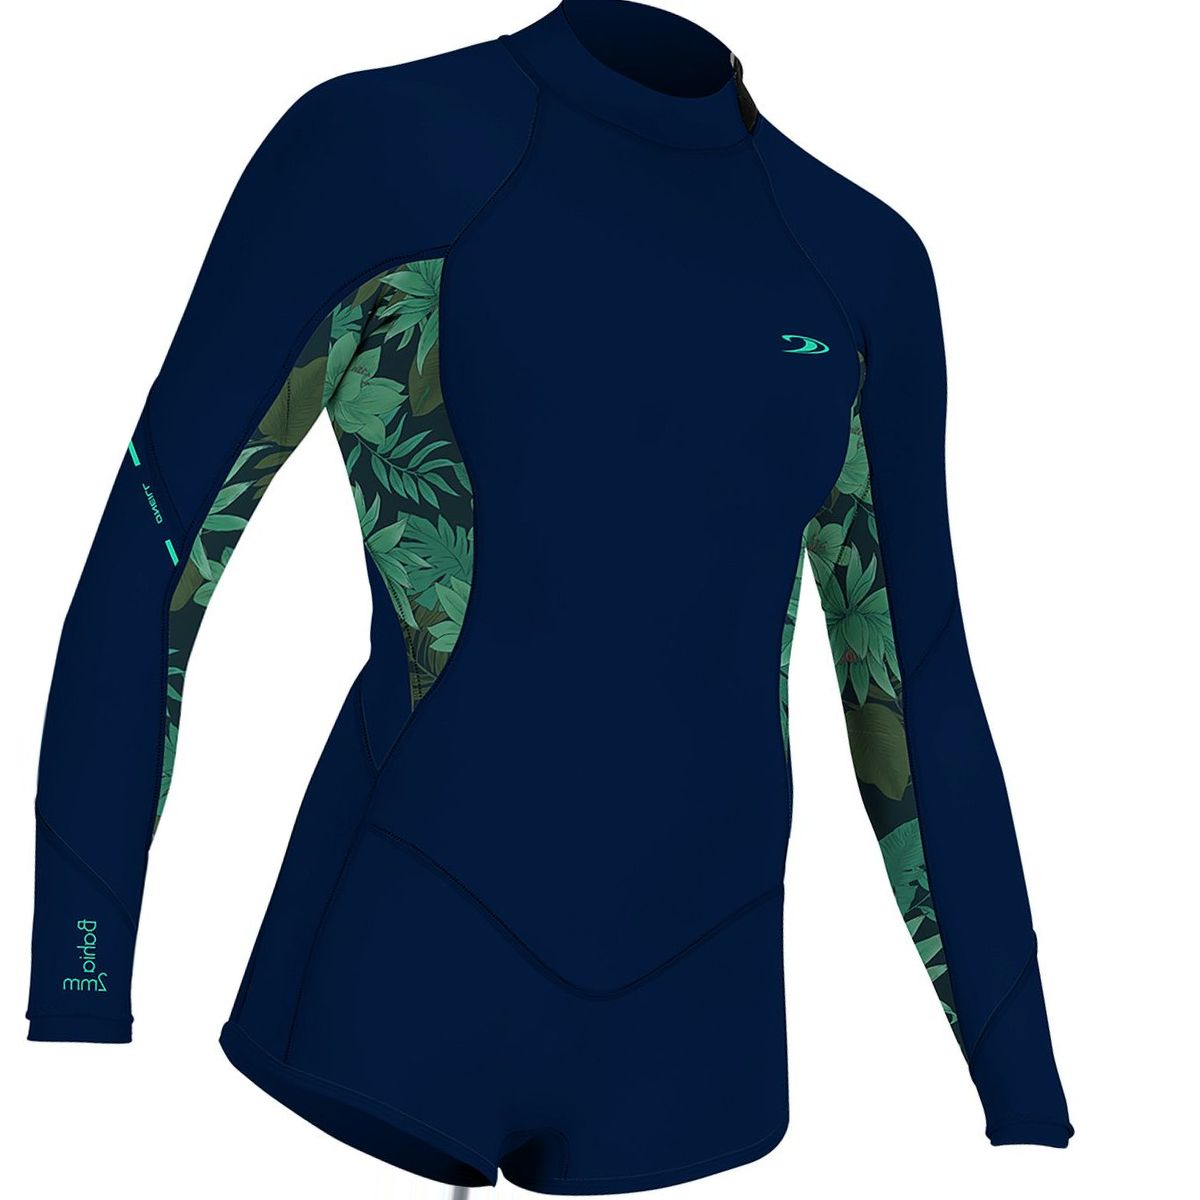 O'Neill Bahia Long-Sleeve Short Spring Wetsuit - Women's